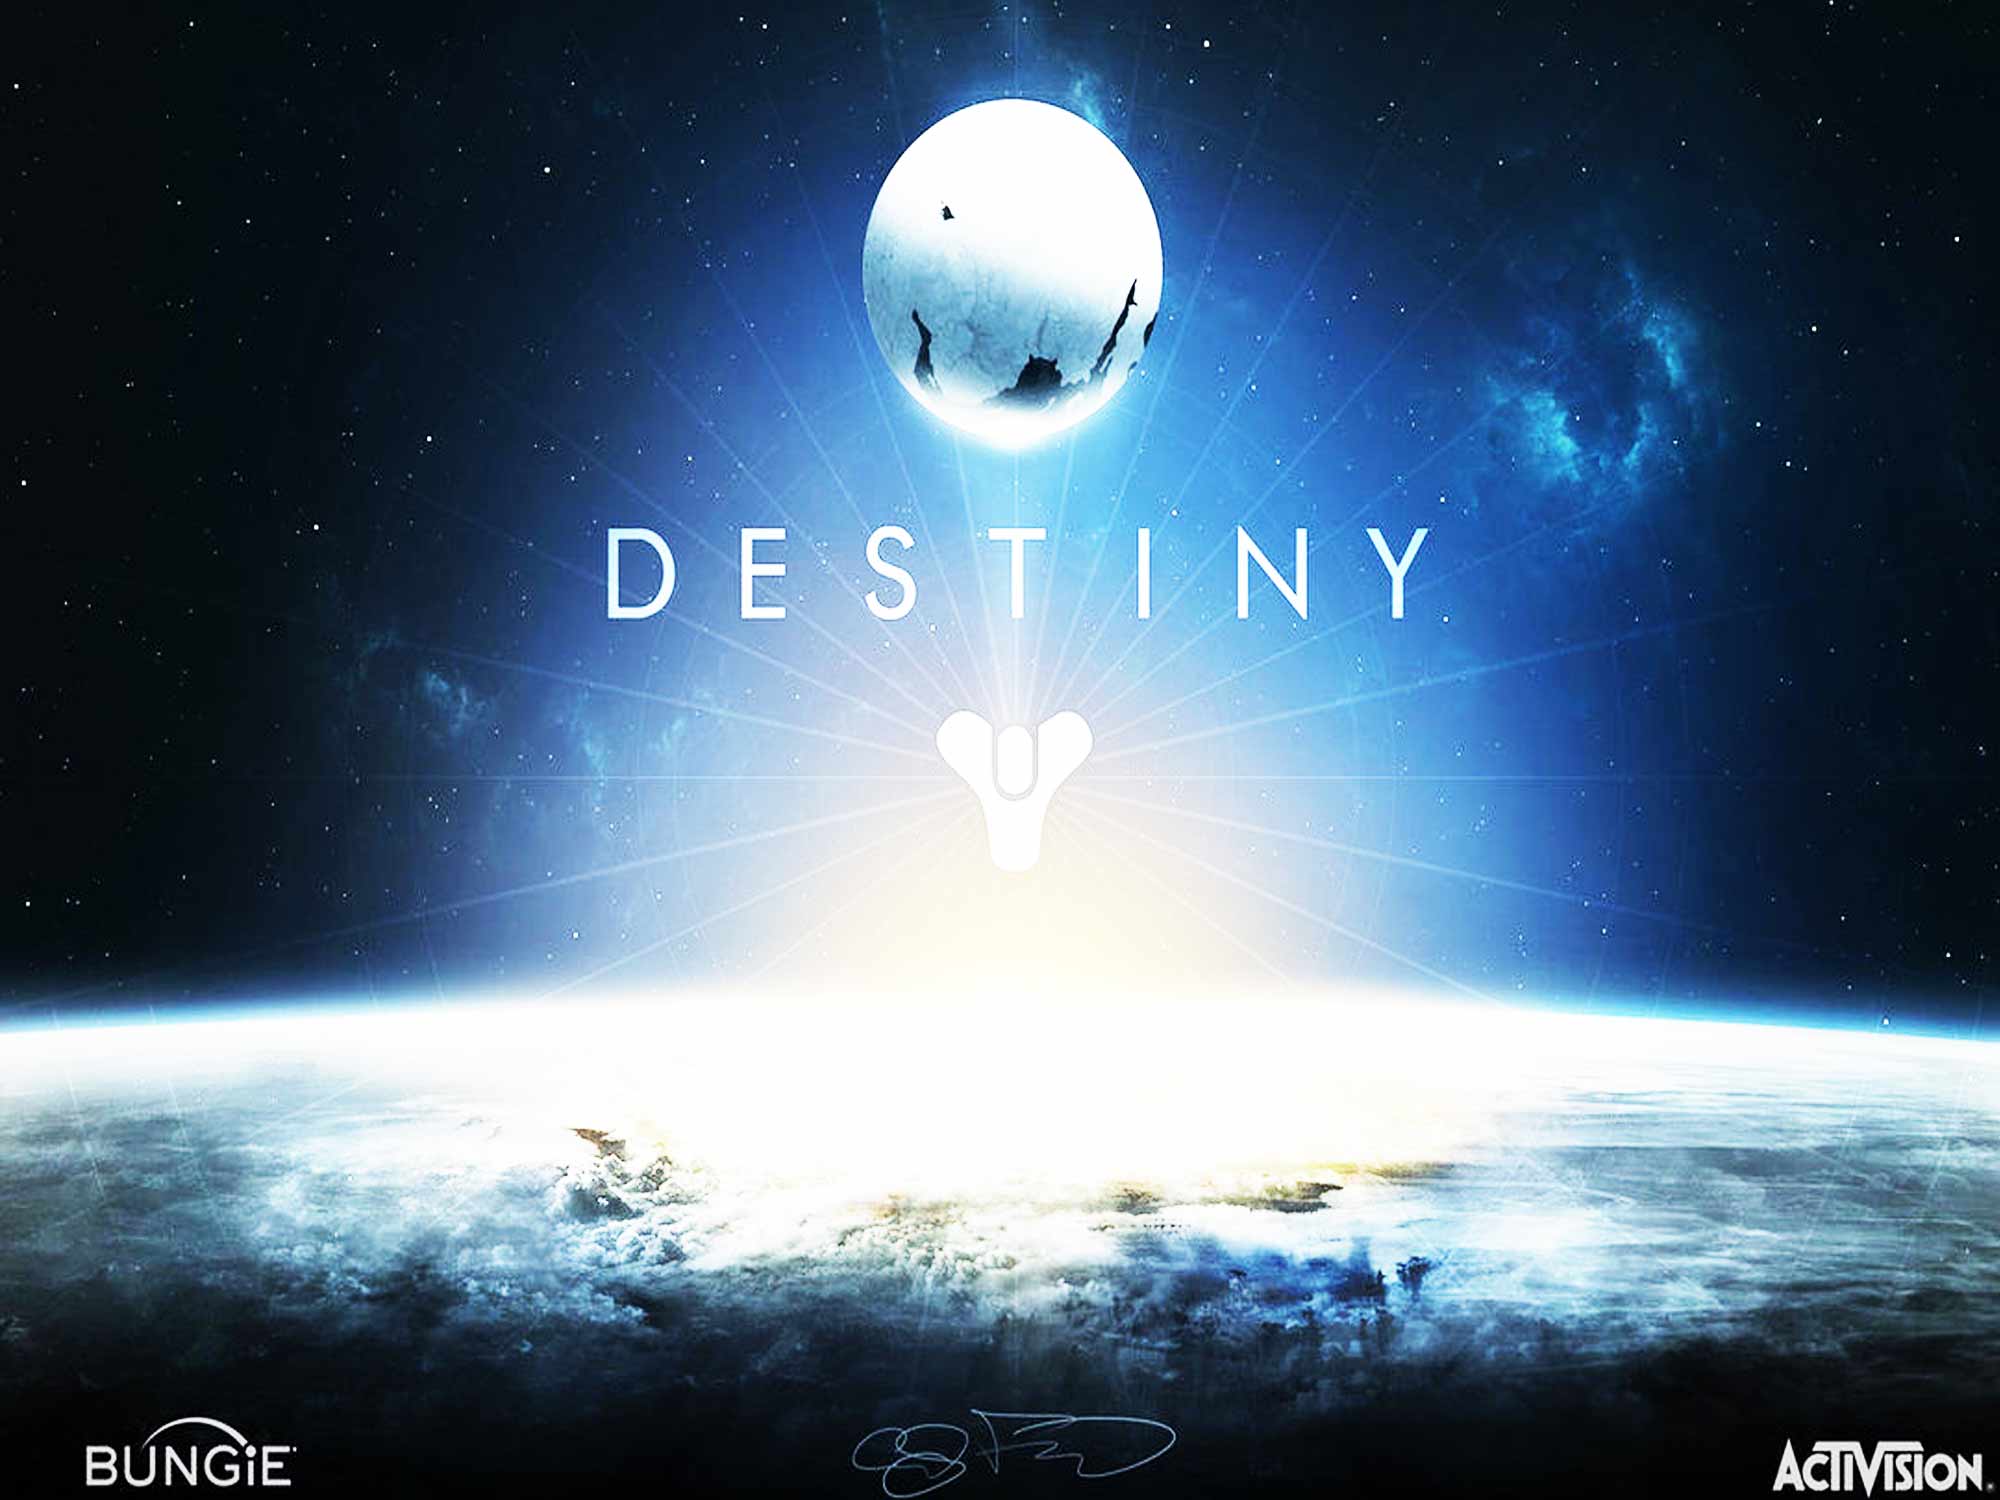 Destiny gameplay graphics logo wallpaper and more